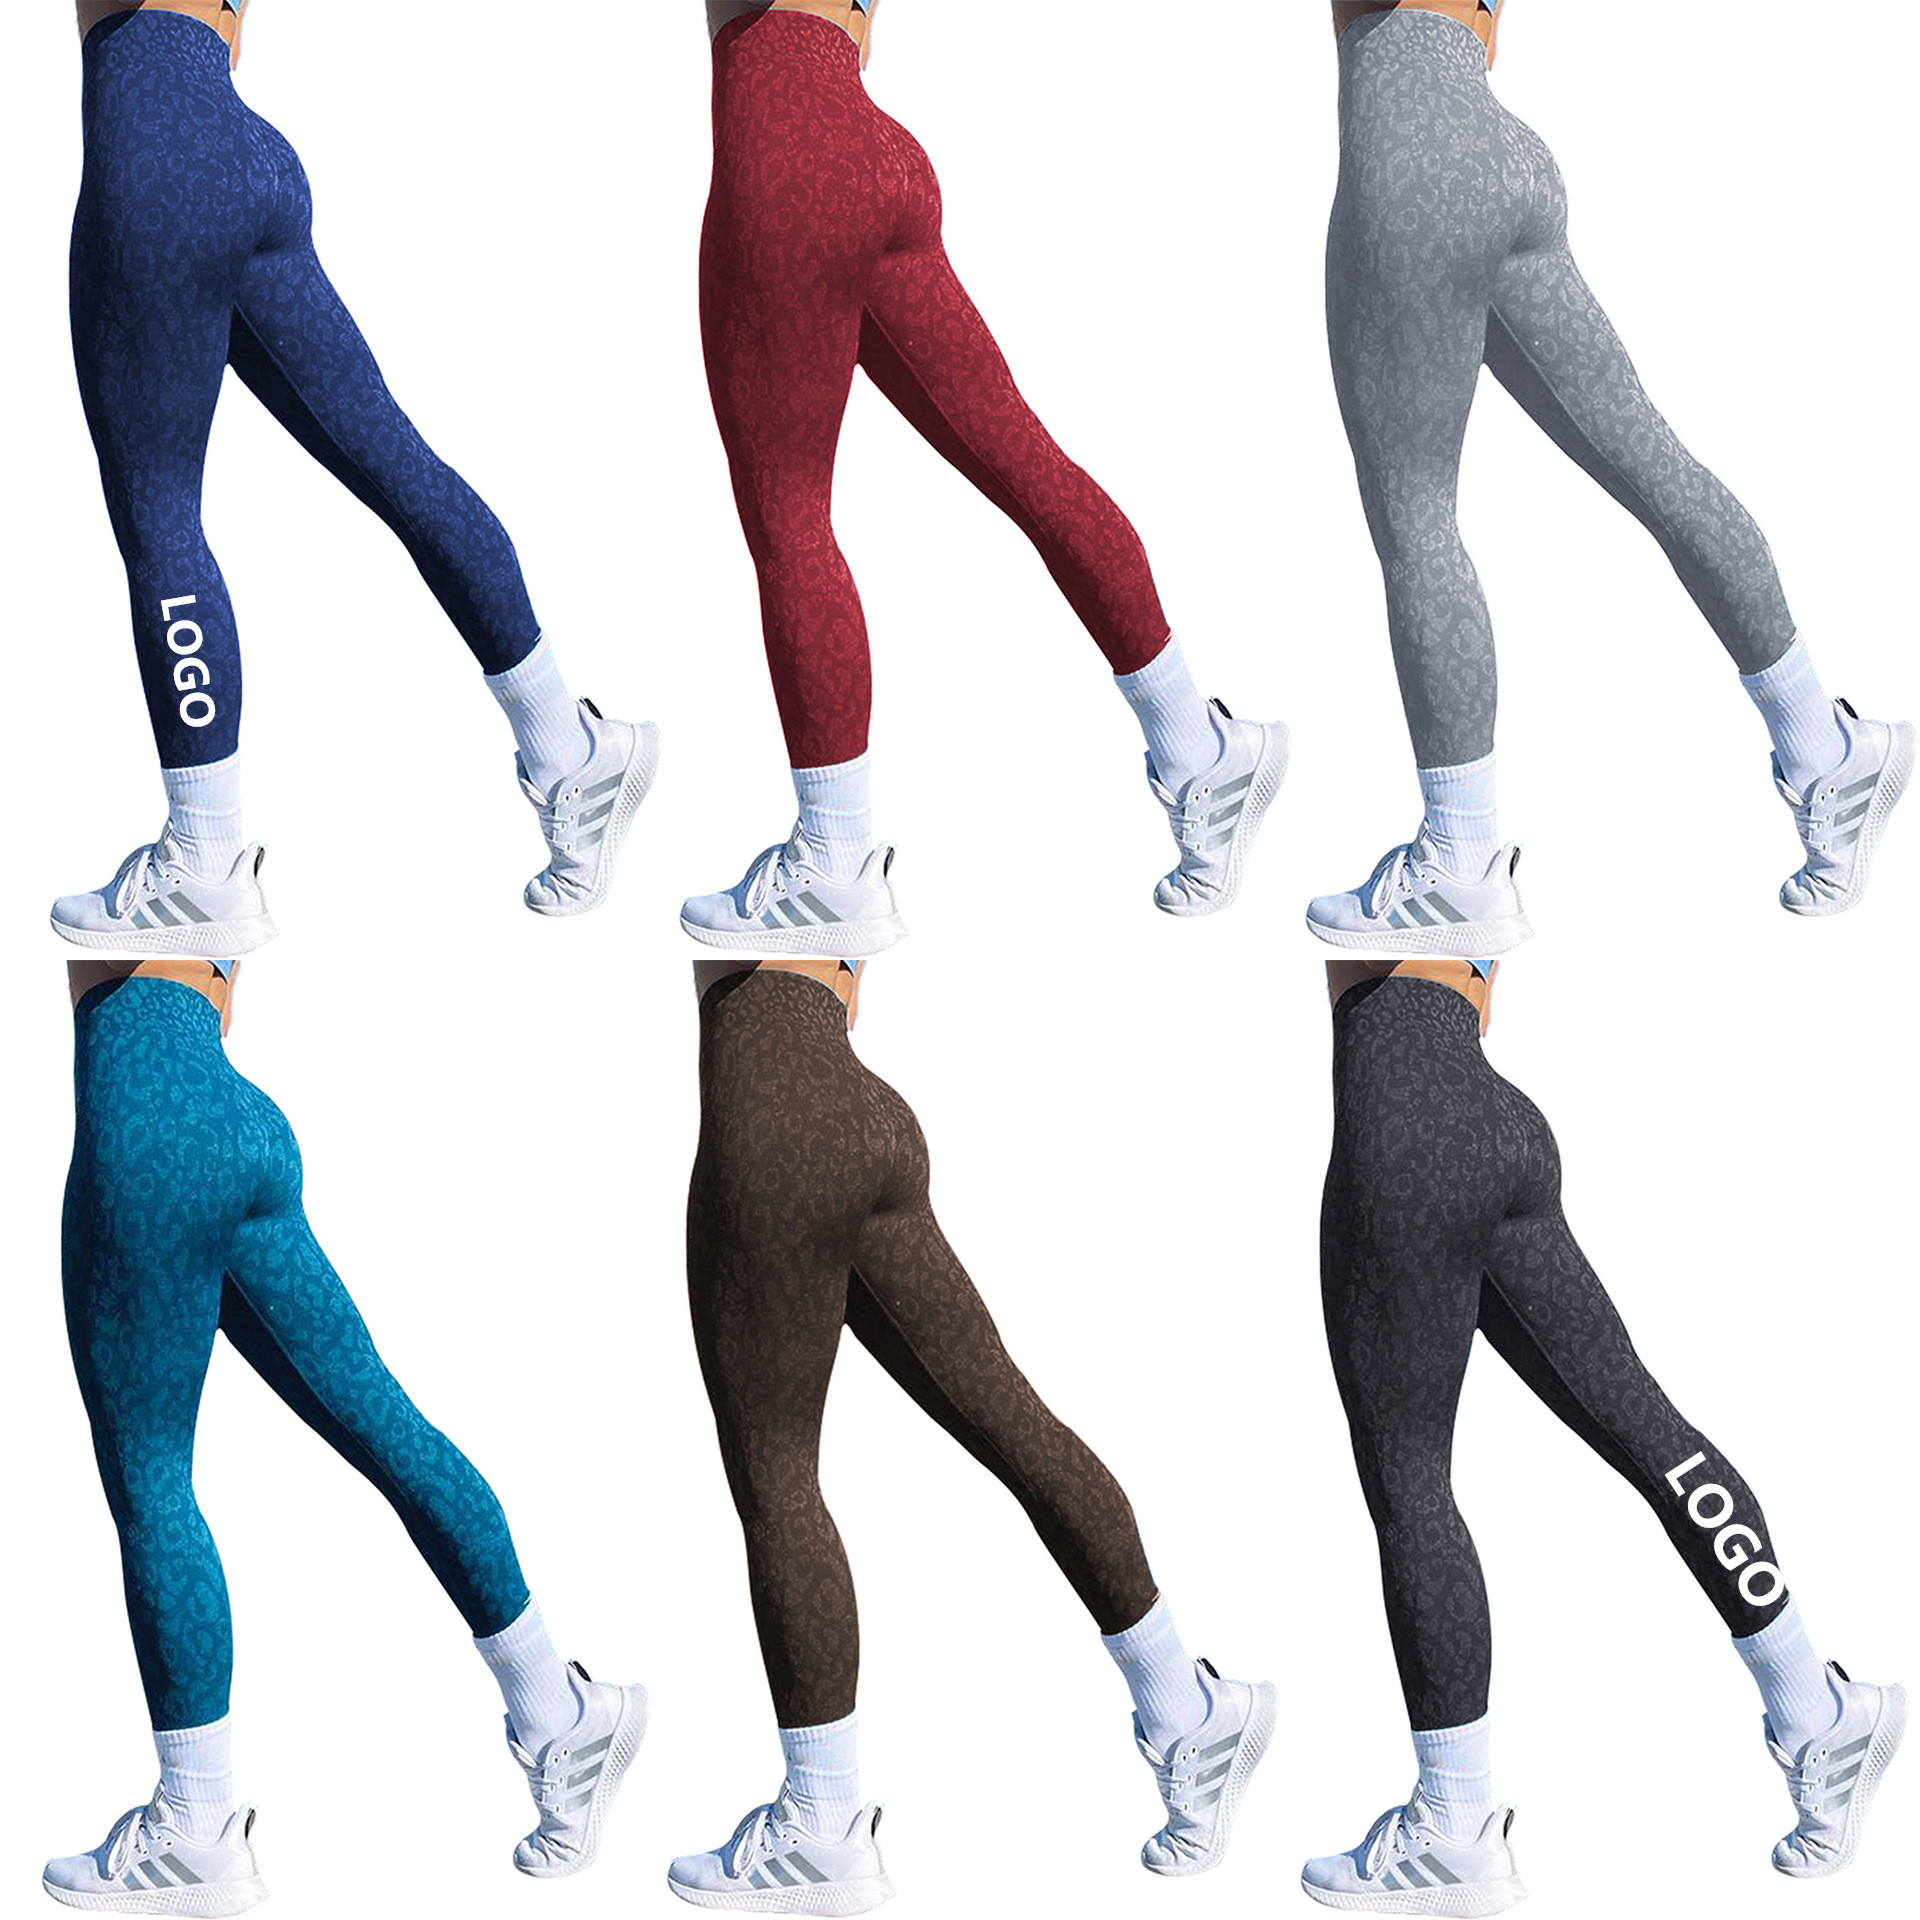 Women Butt Lift Yoga Pants High Waist Squatproof Compression Leggings Featured Image